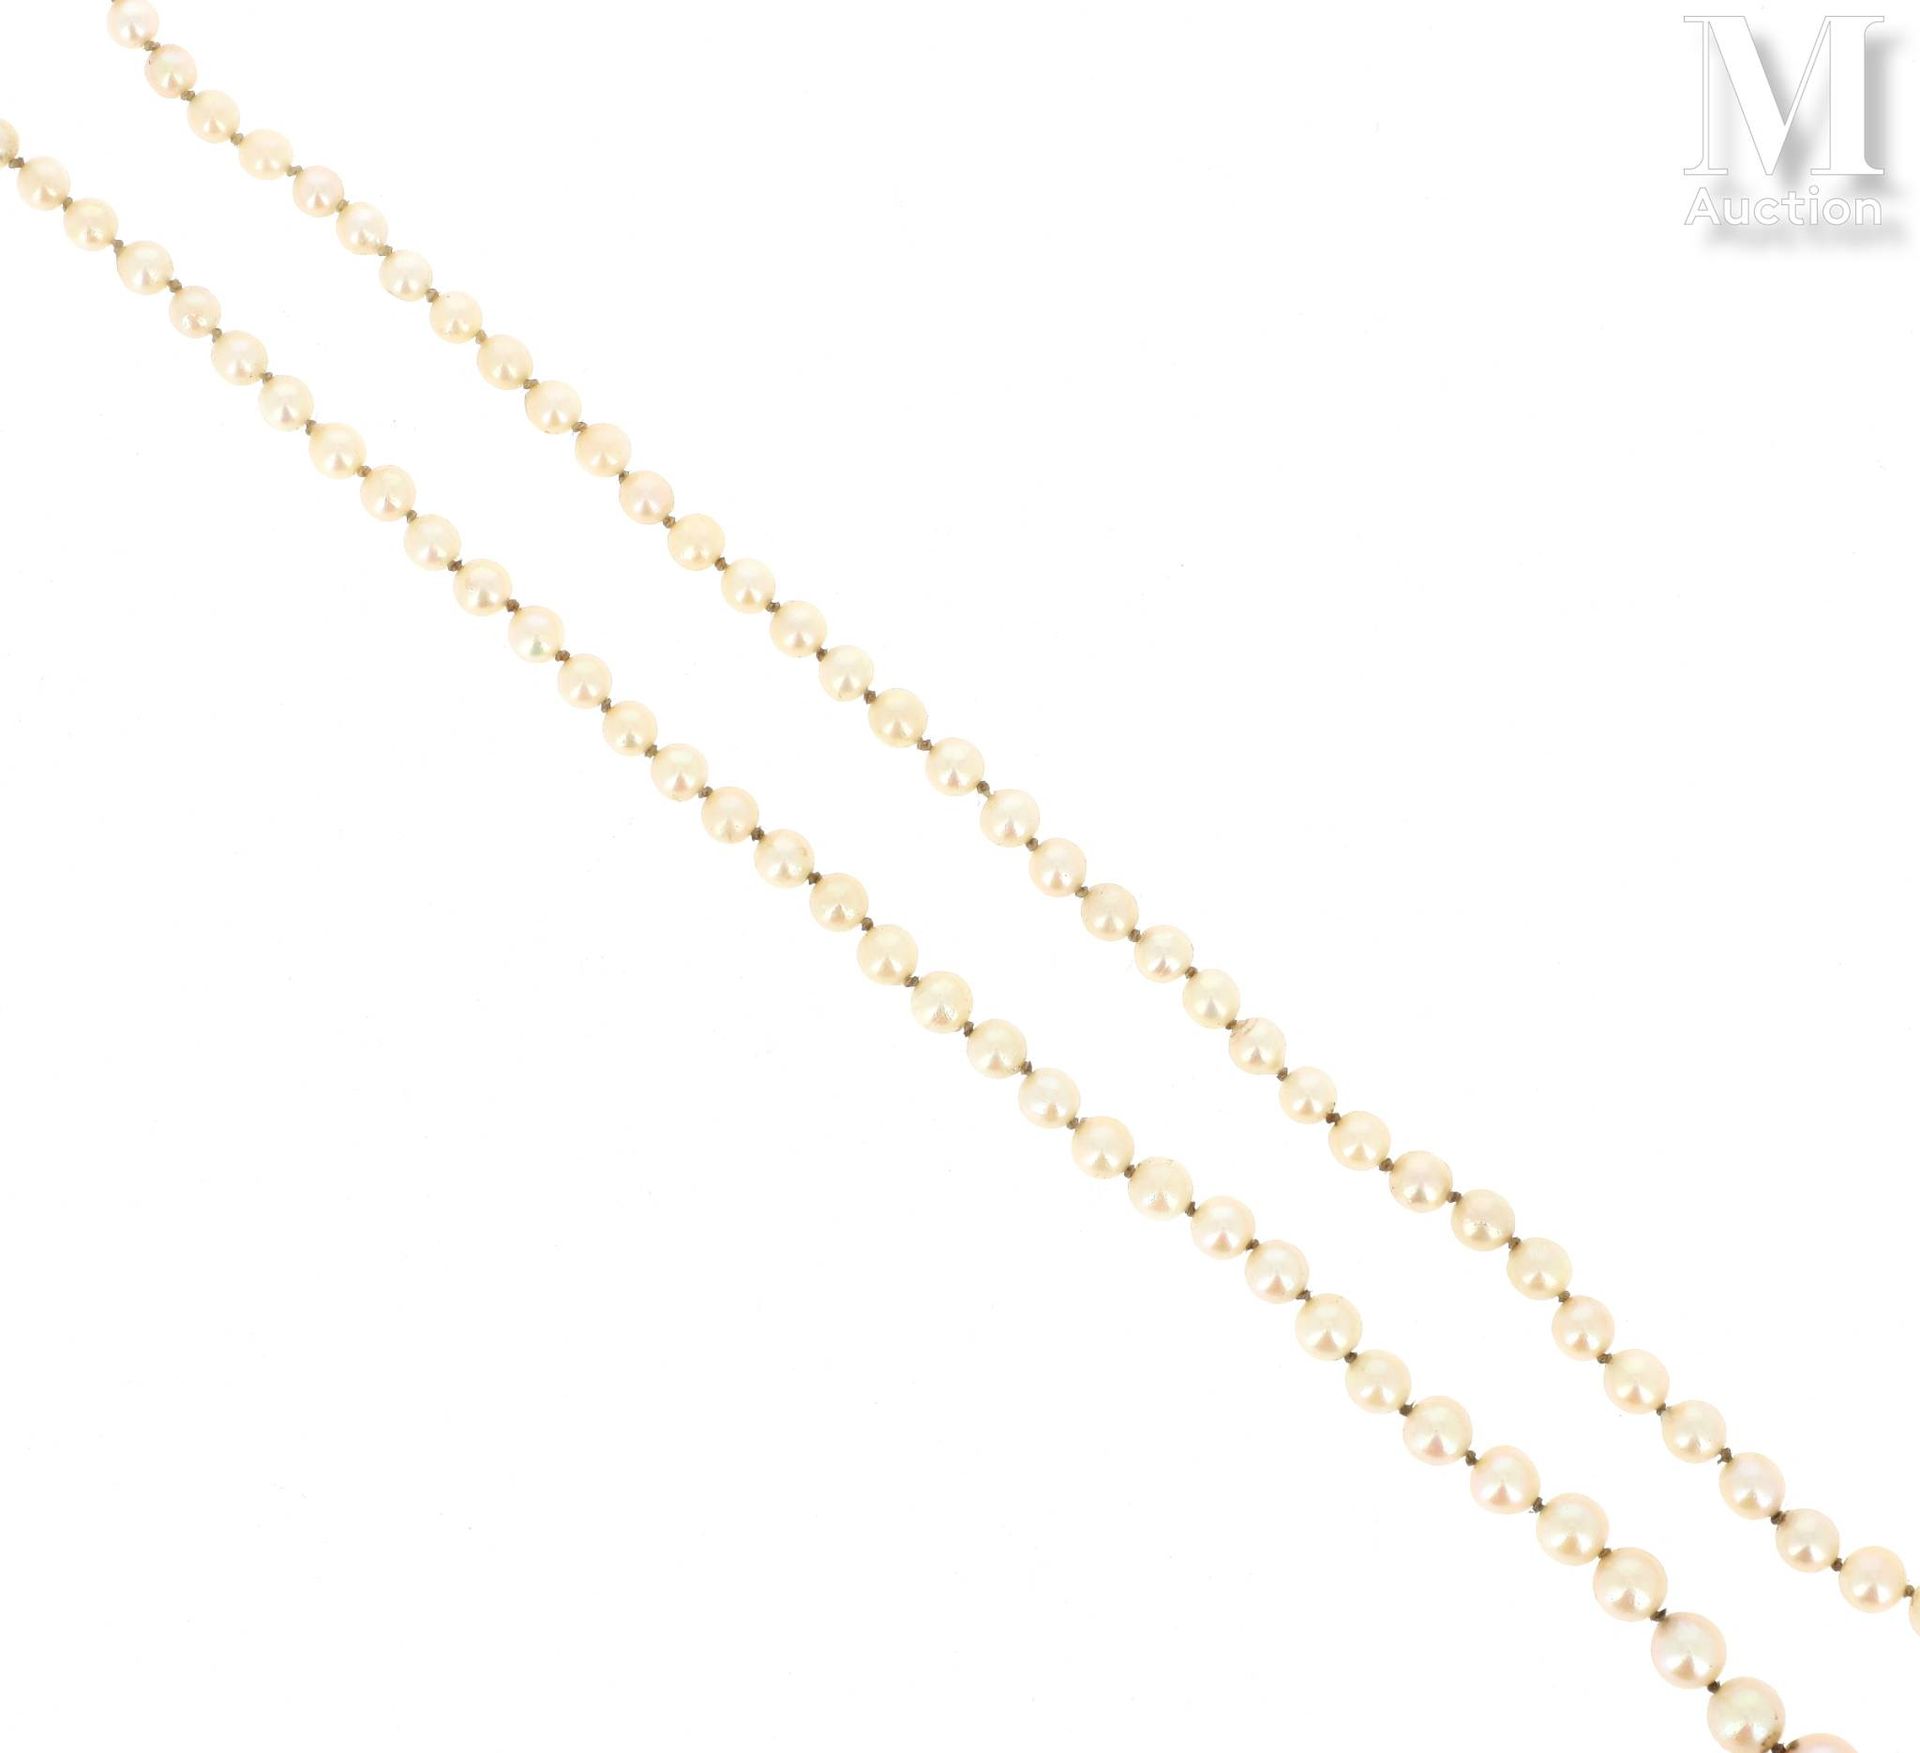 Collier de perles 养殖珍珠项链(shocks)排列在秋天，18K黄金(750°/°)扣片棘轮带安全链。

毛重：13.8克。

长：51厘米